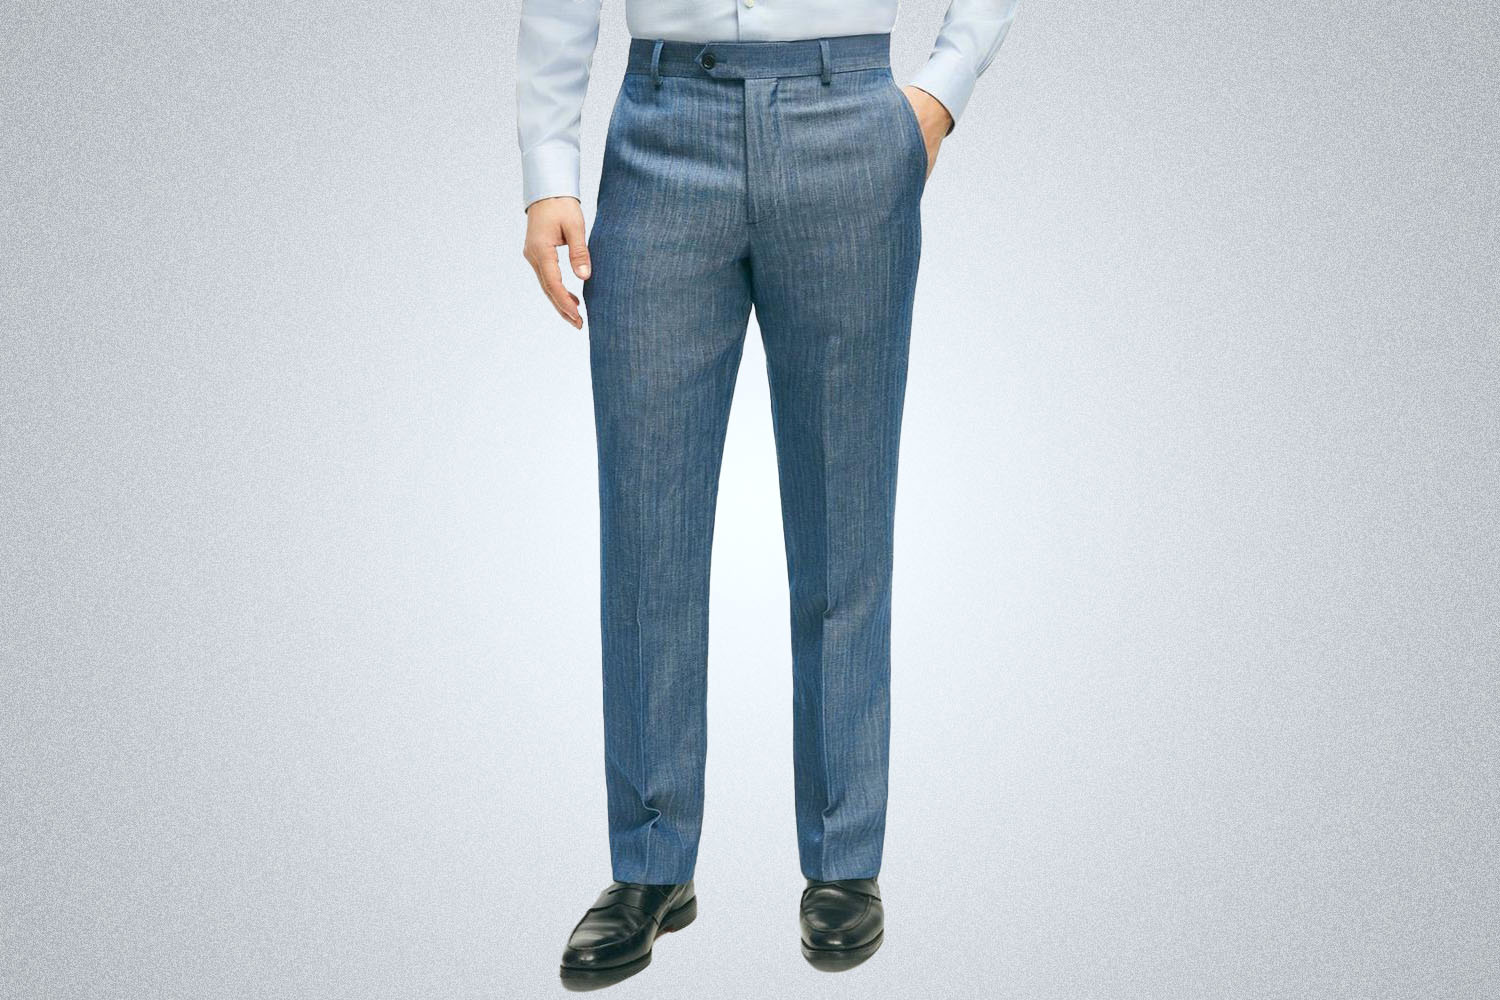 Brooks Brothers Replacement Suit Pants Online  dainikhitnewscom 1691223966